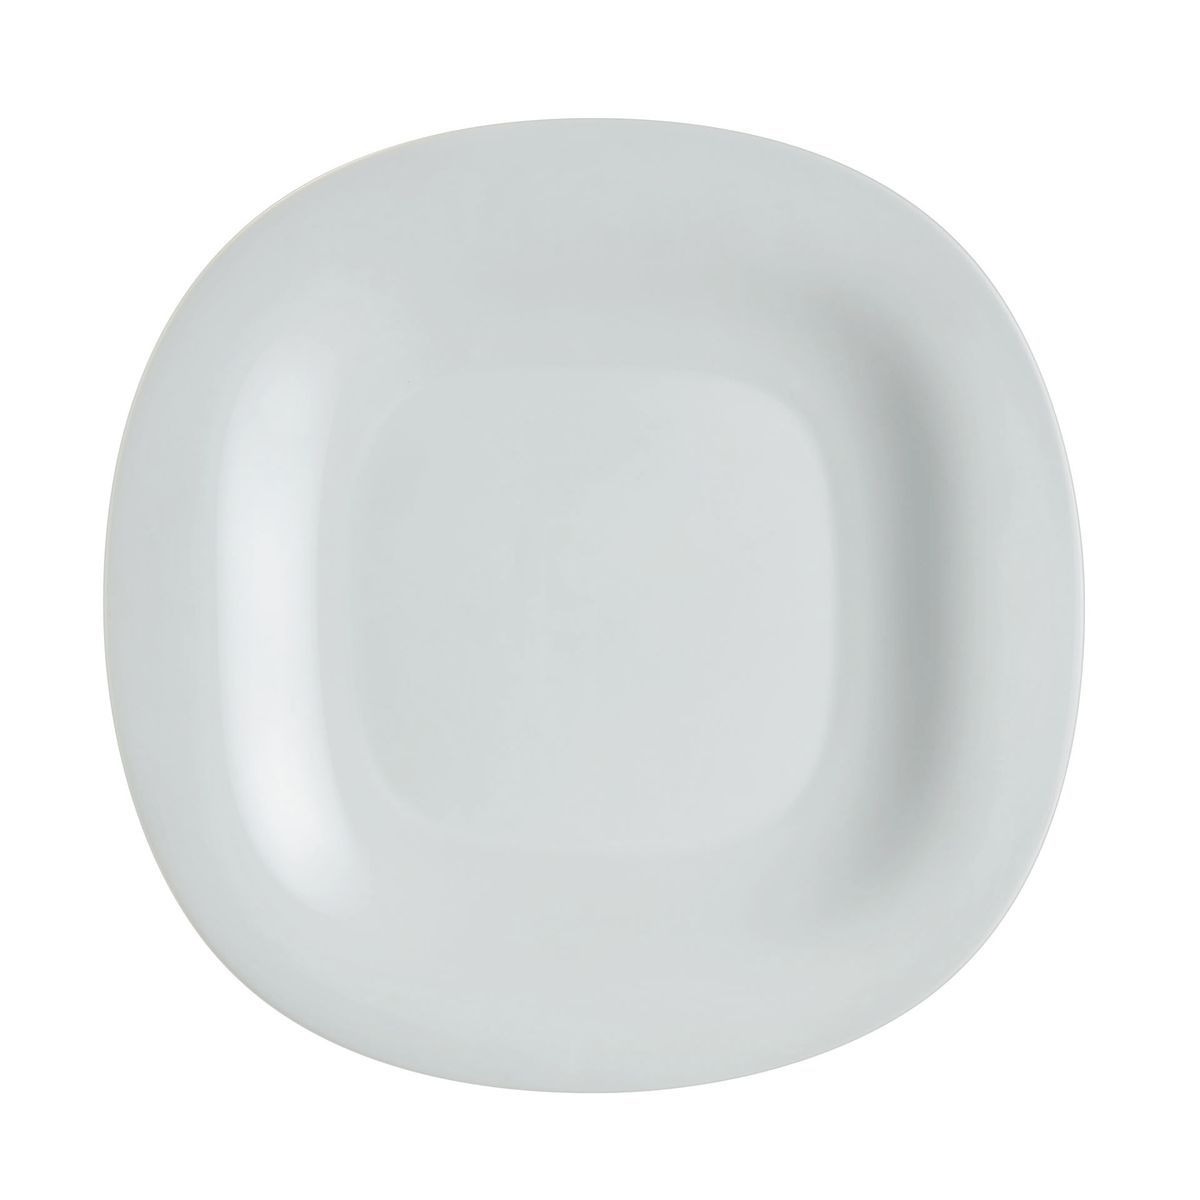 Тарелка обеденная Luminarc Carine granit 27 см тарелка десертная luminarc carine granit 19 см